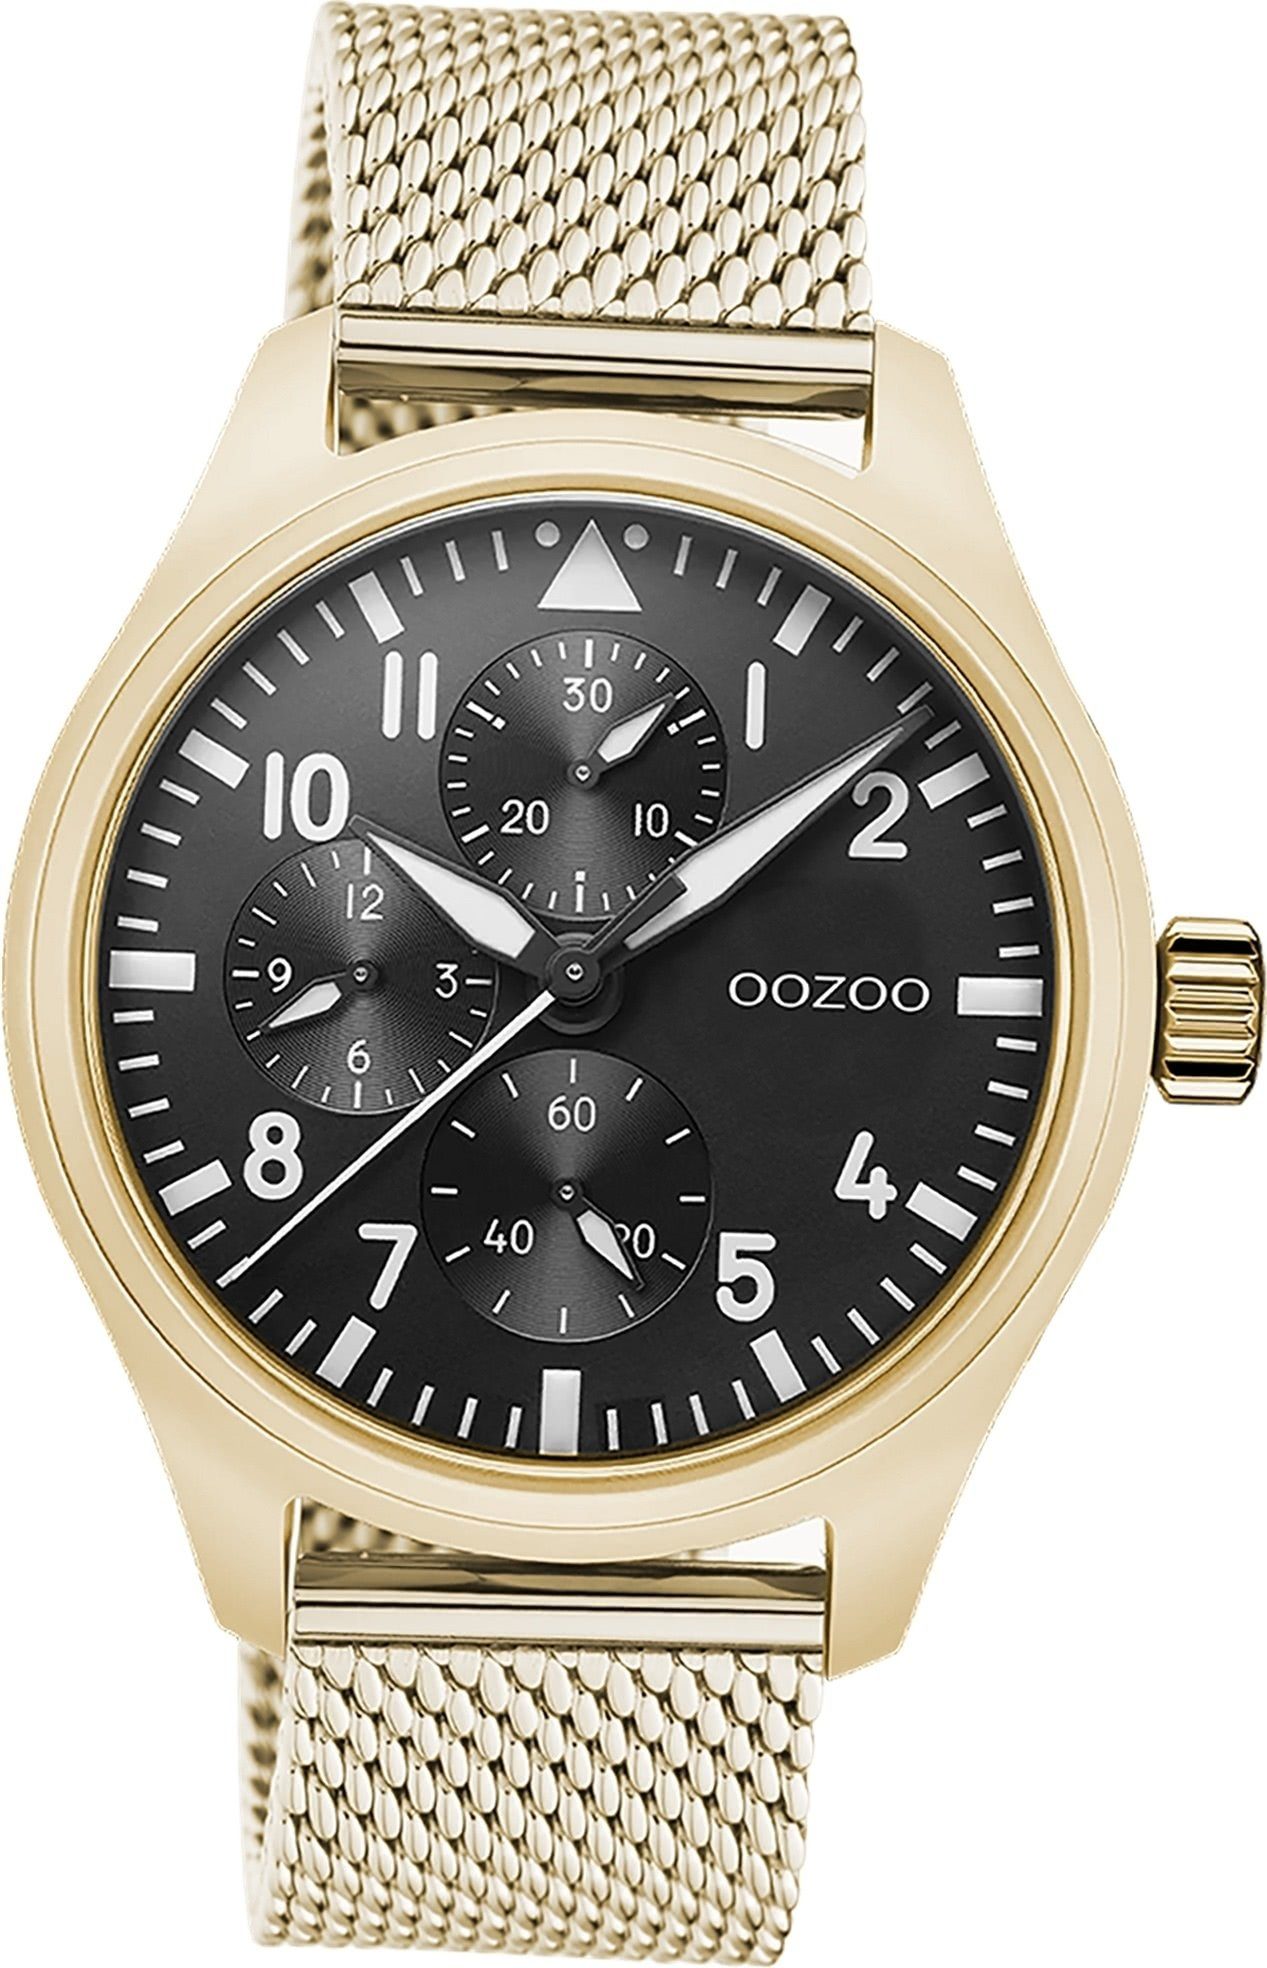 Metall, Quarzuhr Herren groß Timepieces, OOZOO Gehäuse, rundes Armbanduhr Mesharmband gold, Herrenuhr 42mm) Oozoo (ca.